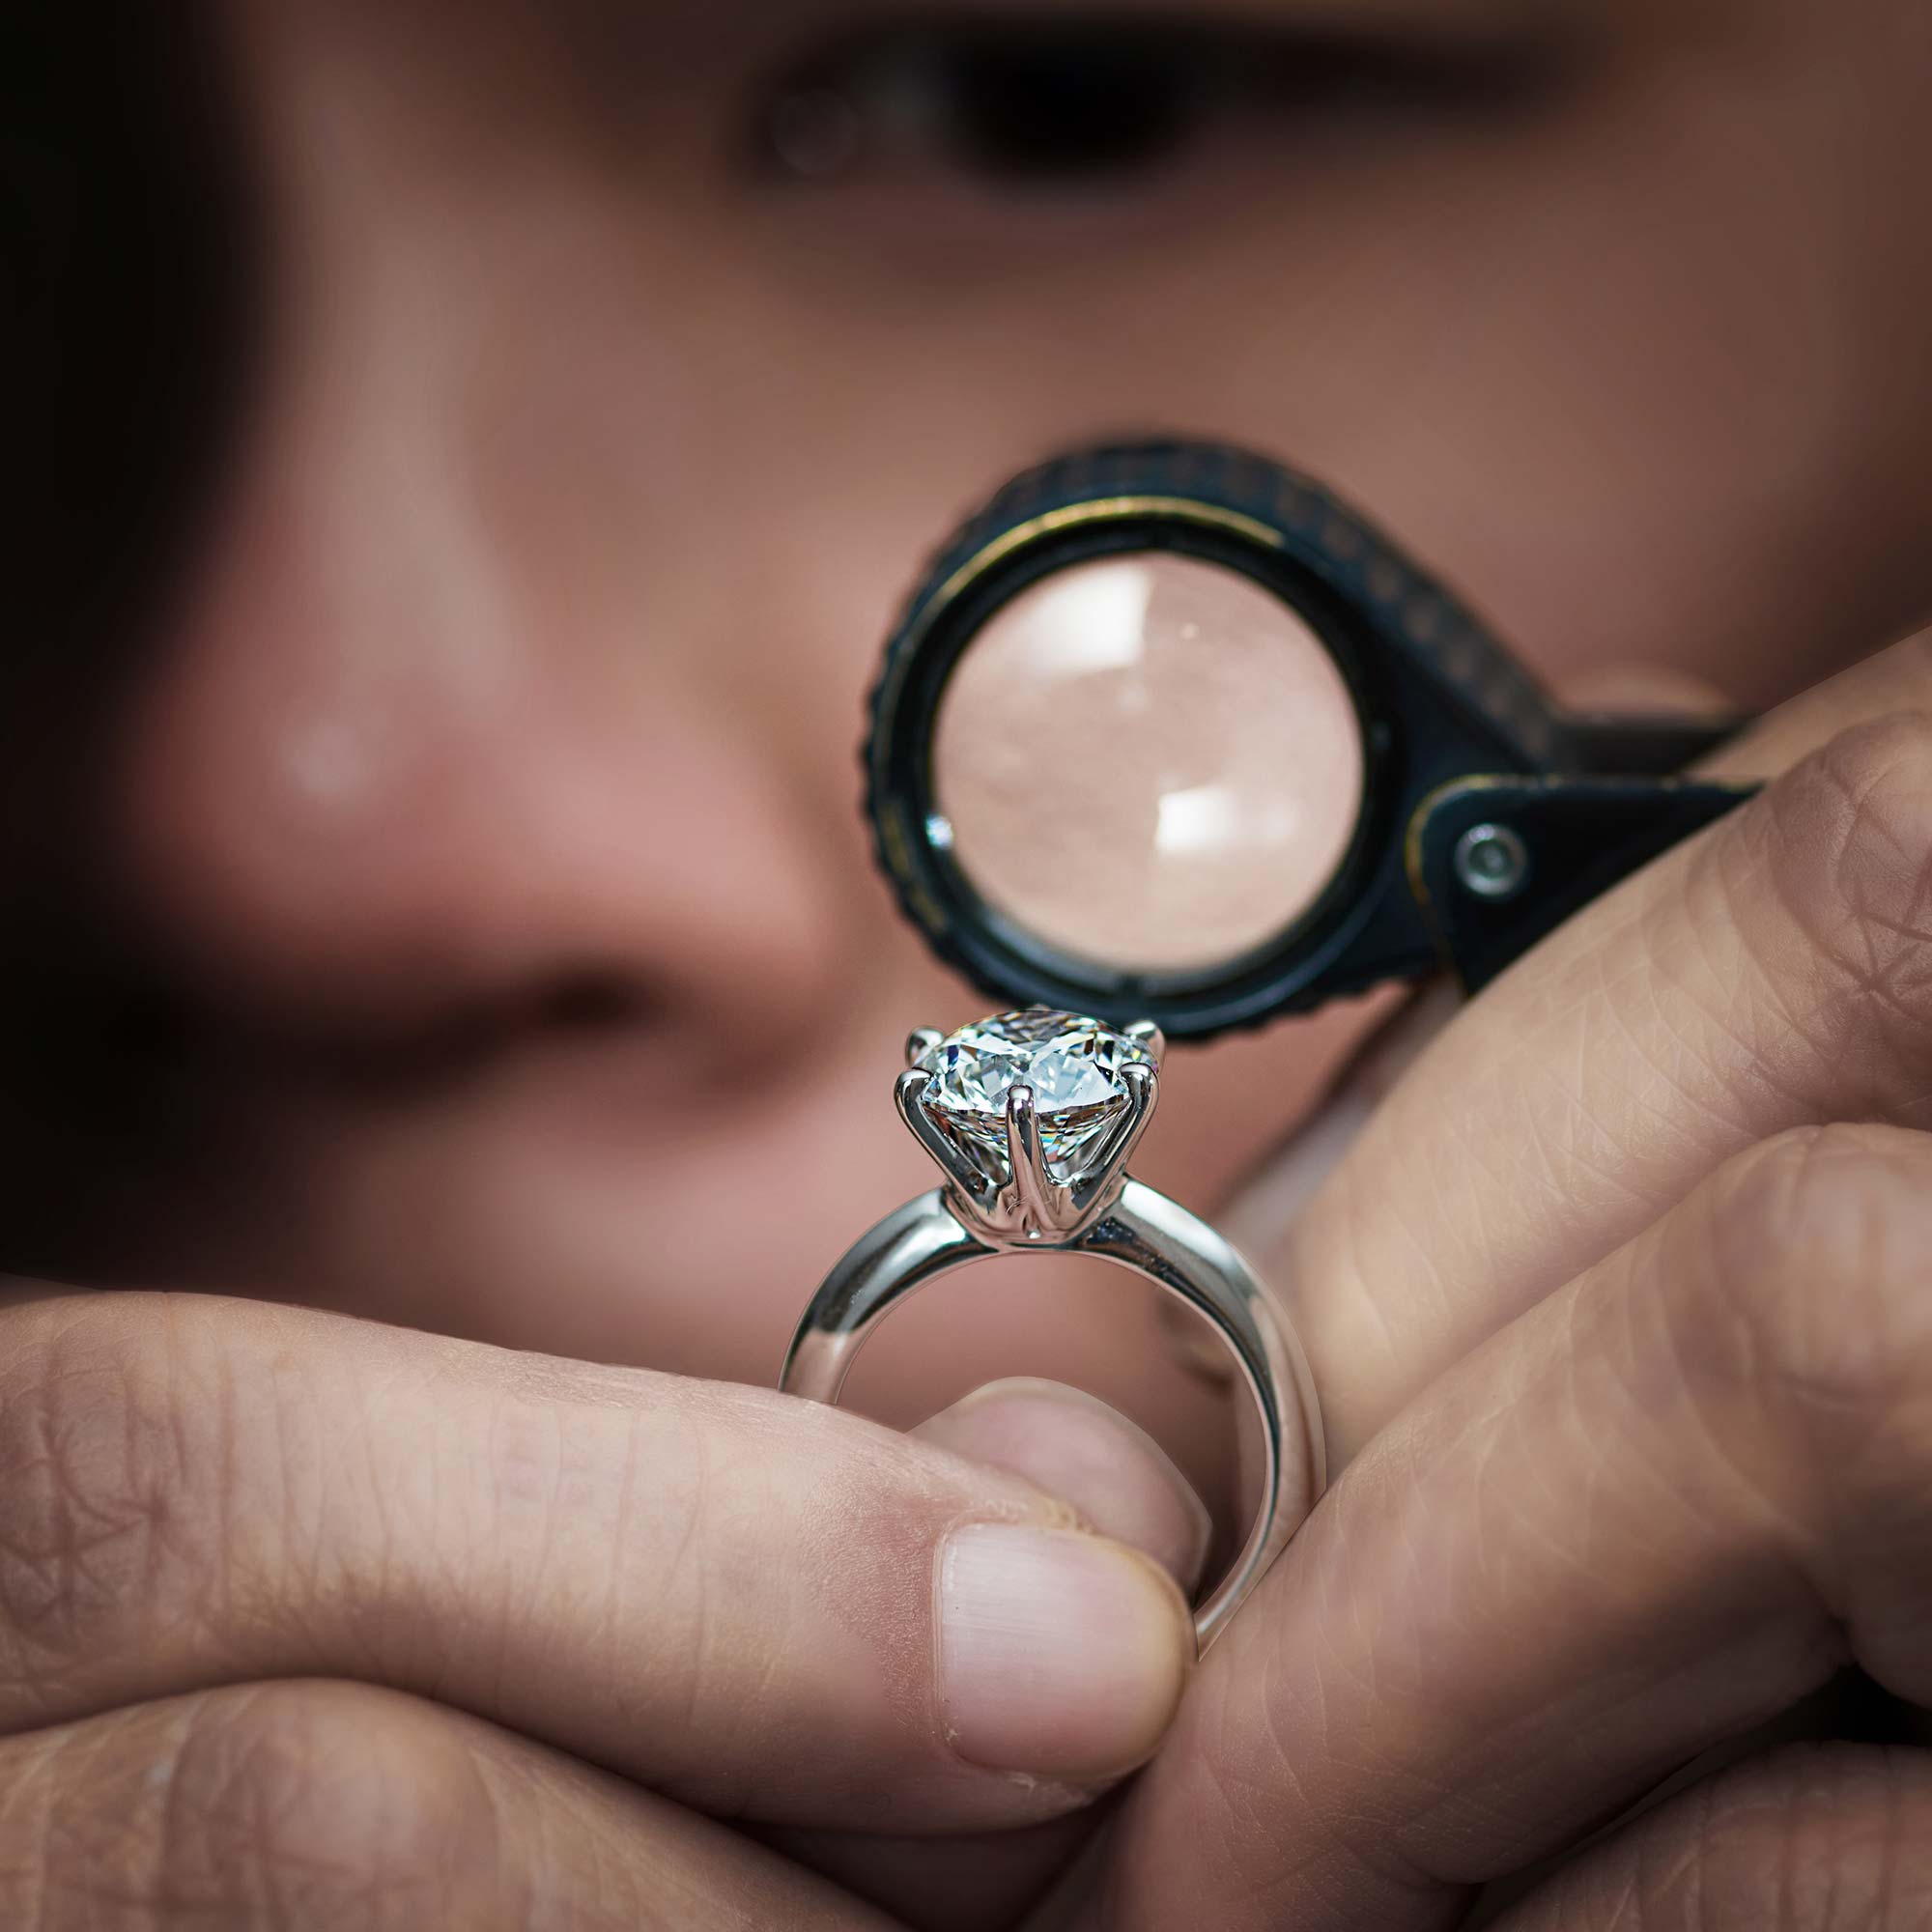 SUEN Gemologist inspecting a diamond